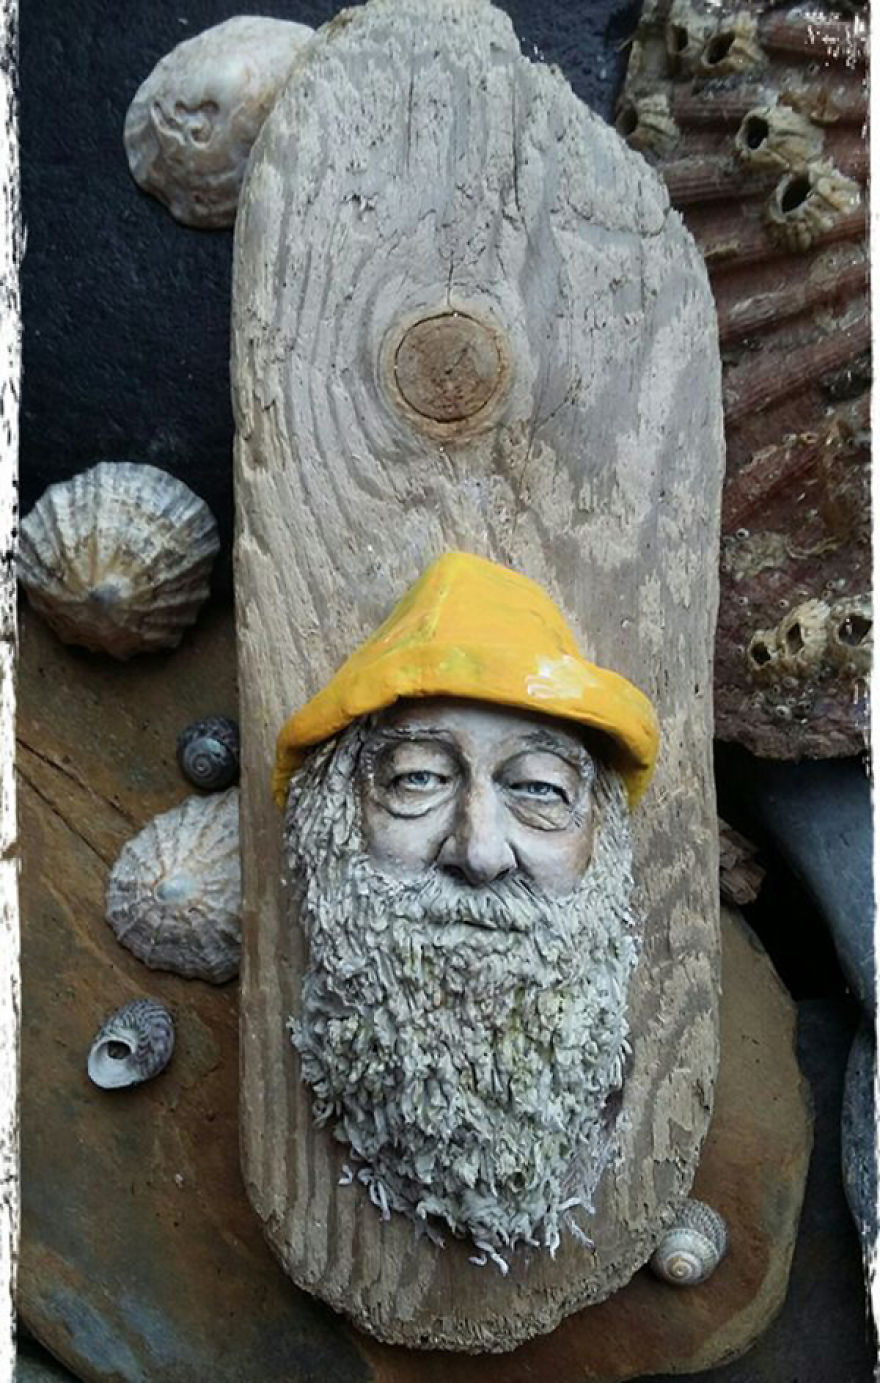 "Forgotten Faces - Kinsale" Captures Irish Fishermen & Characters In Clay